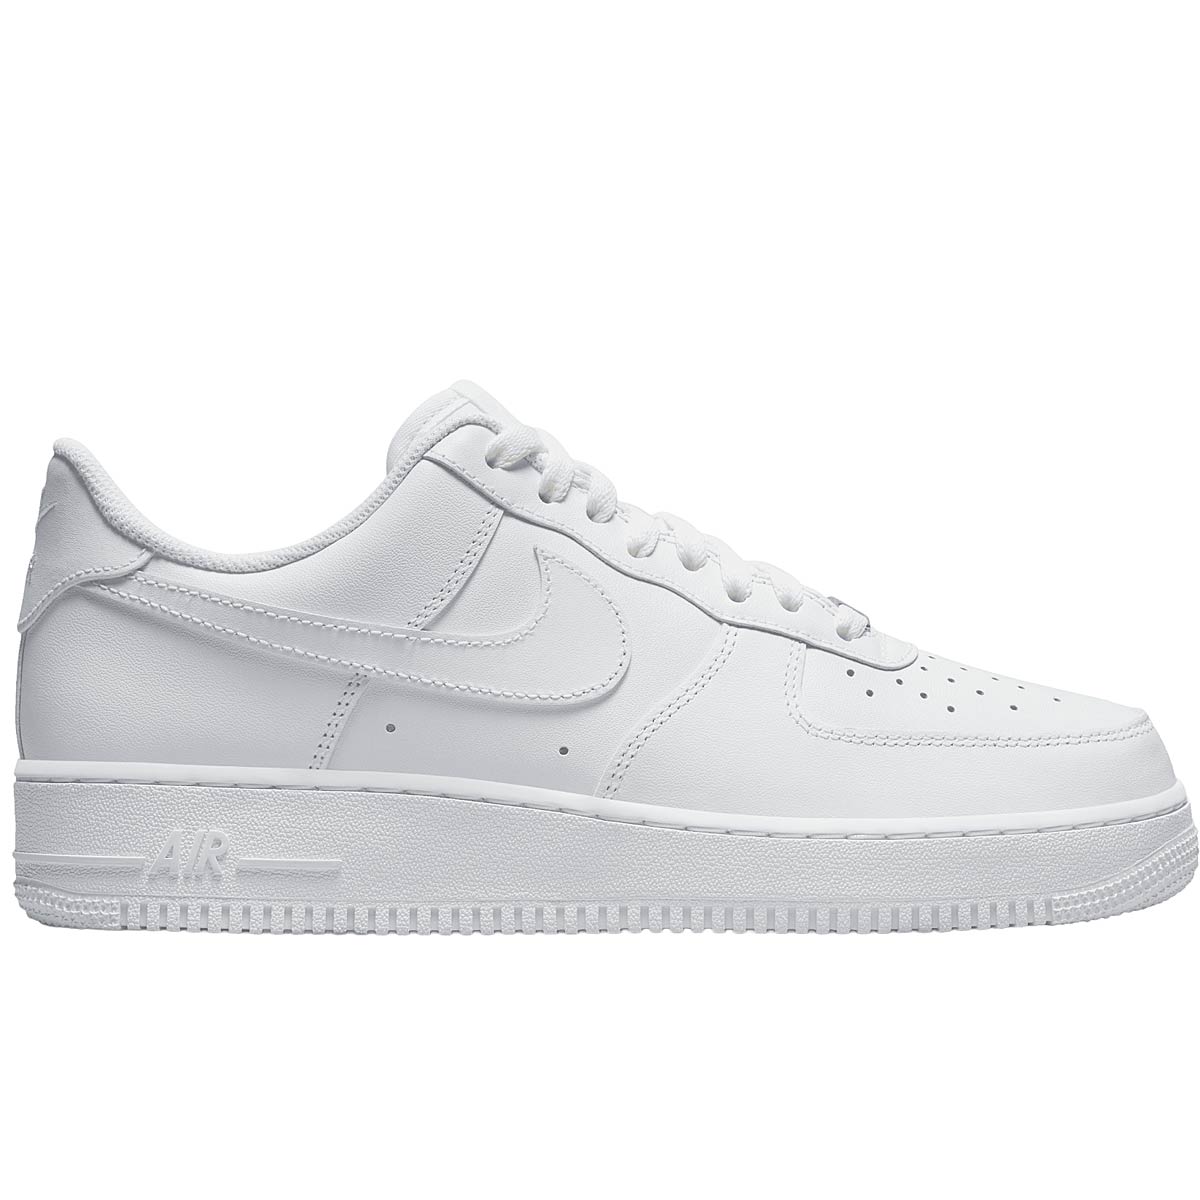 Nike Air Force 1 '07, White/White